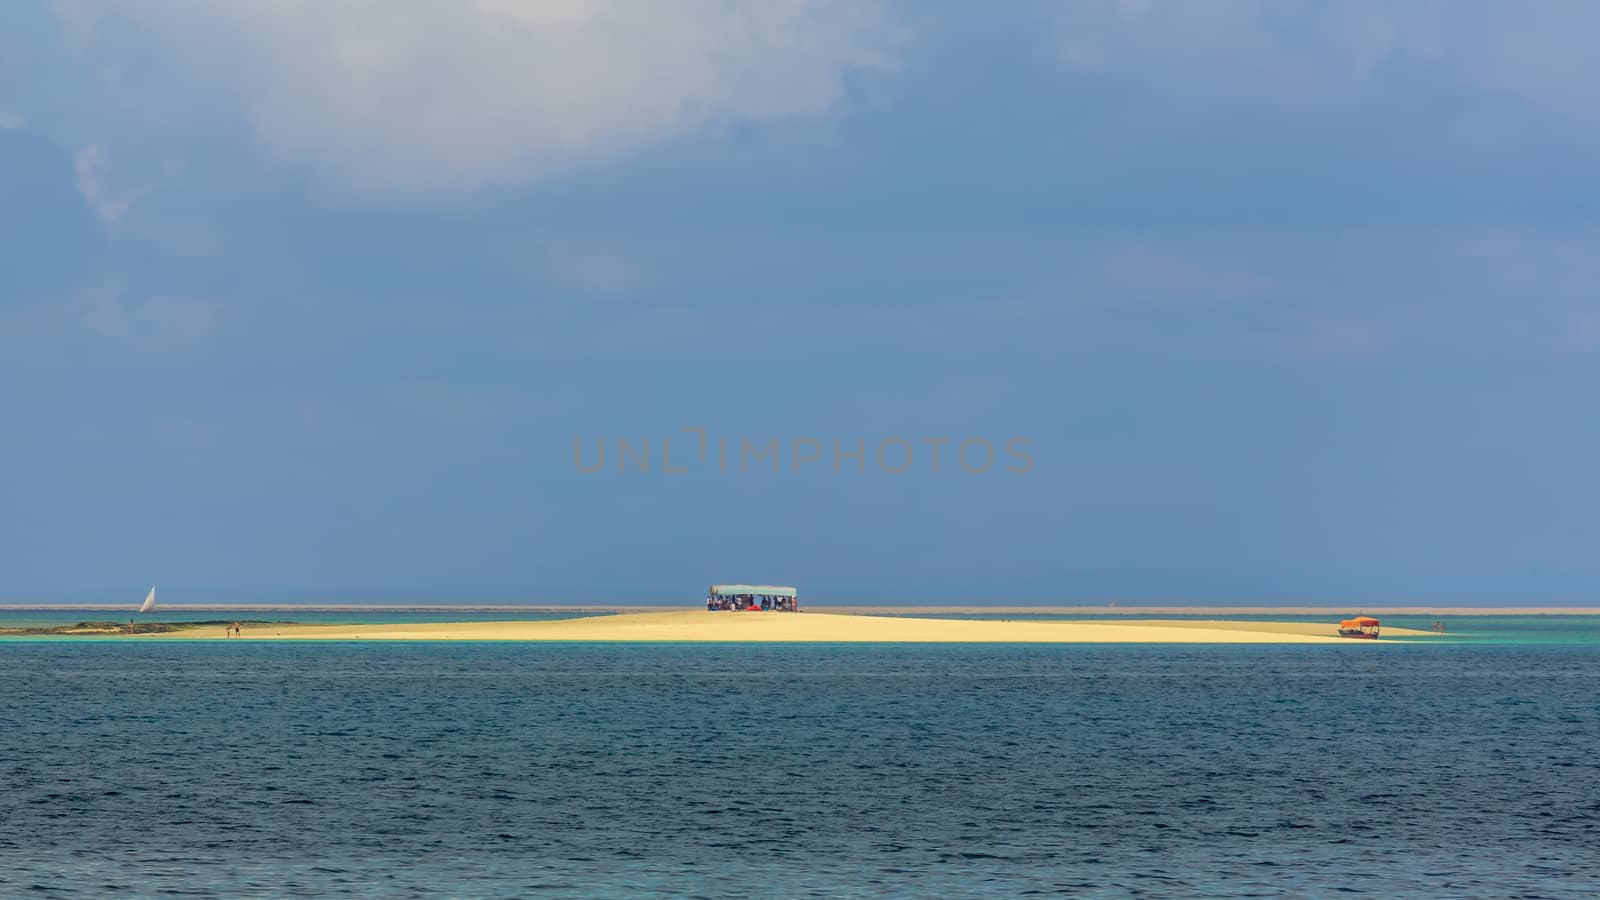 A tiny Island in the middle of the Indian Ocean, near Zanzibar, Tanzania.